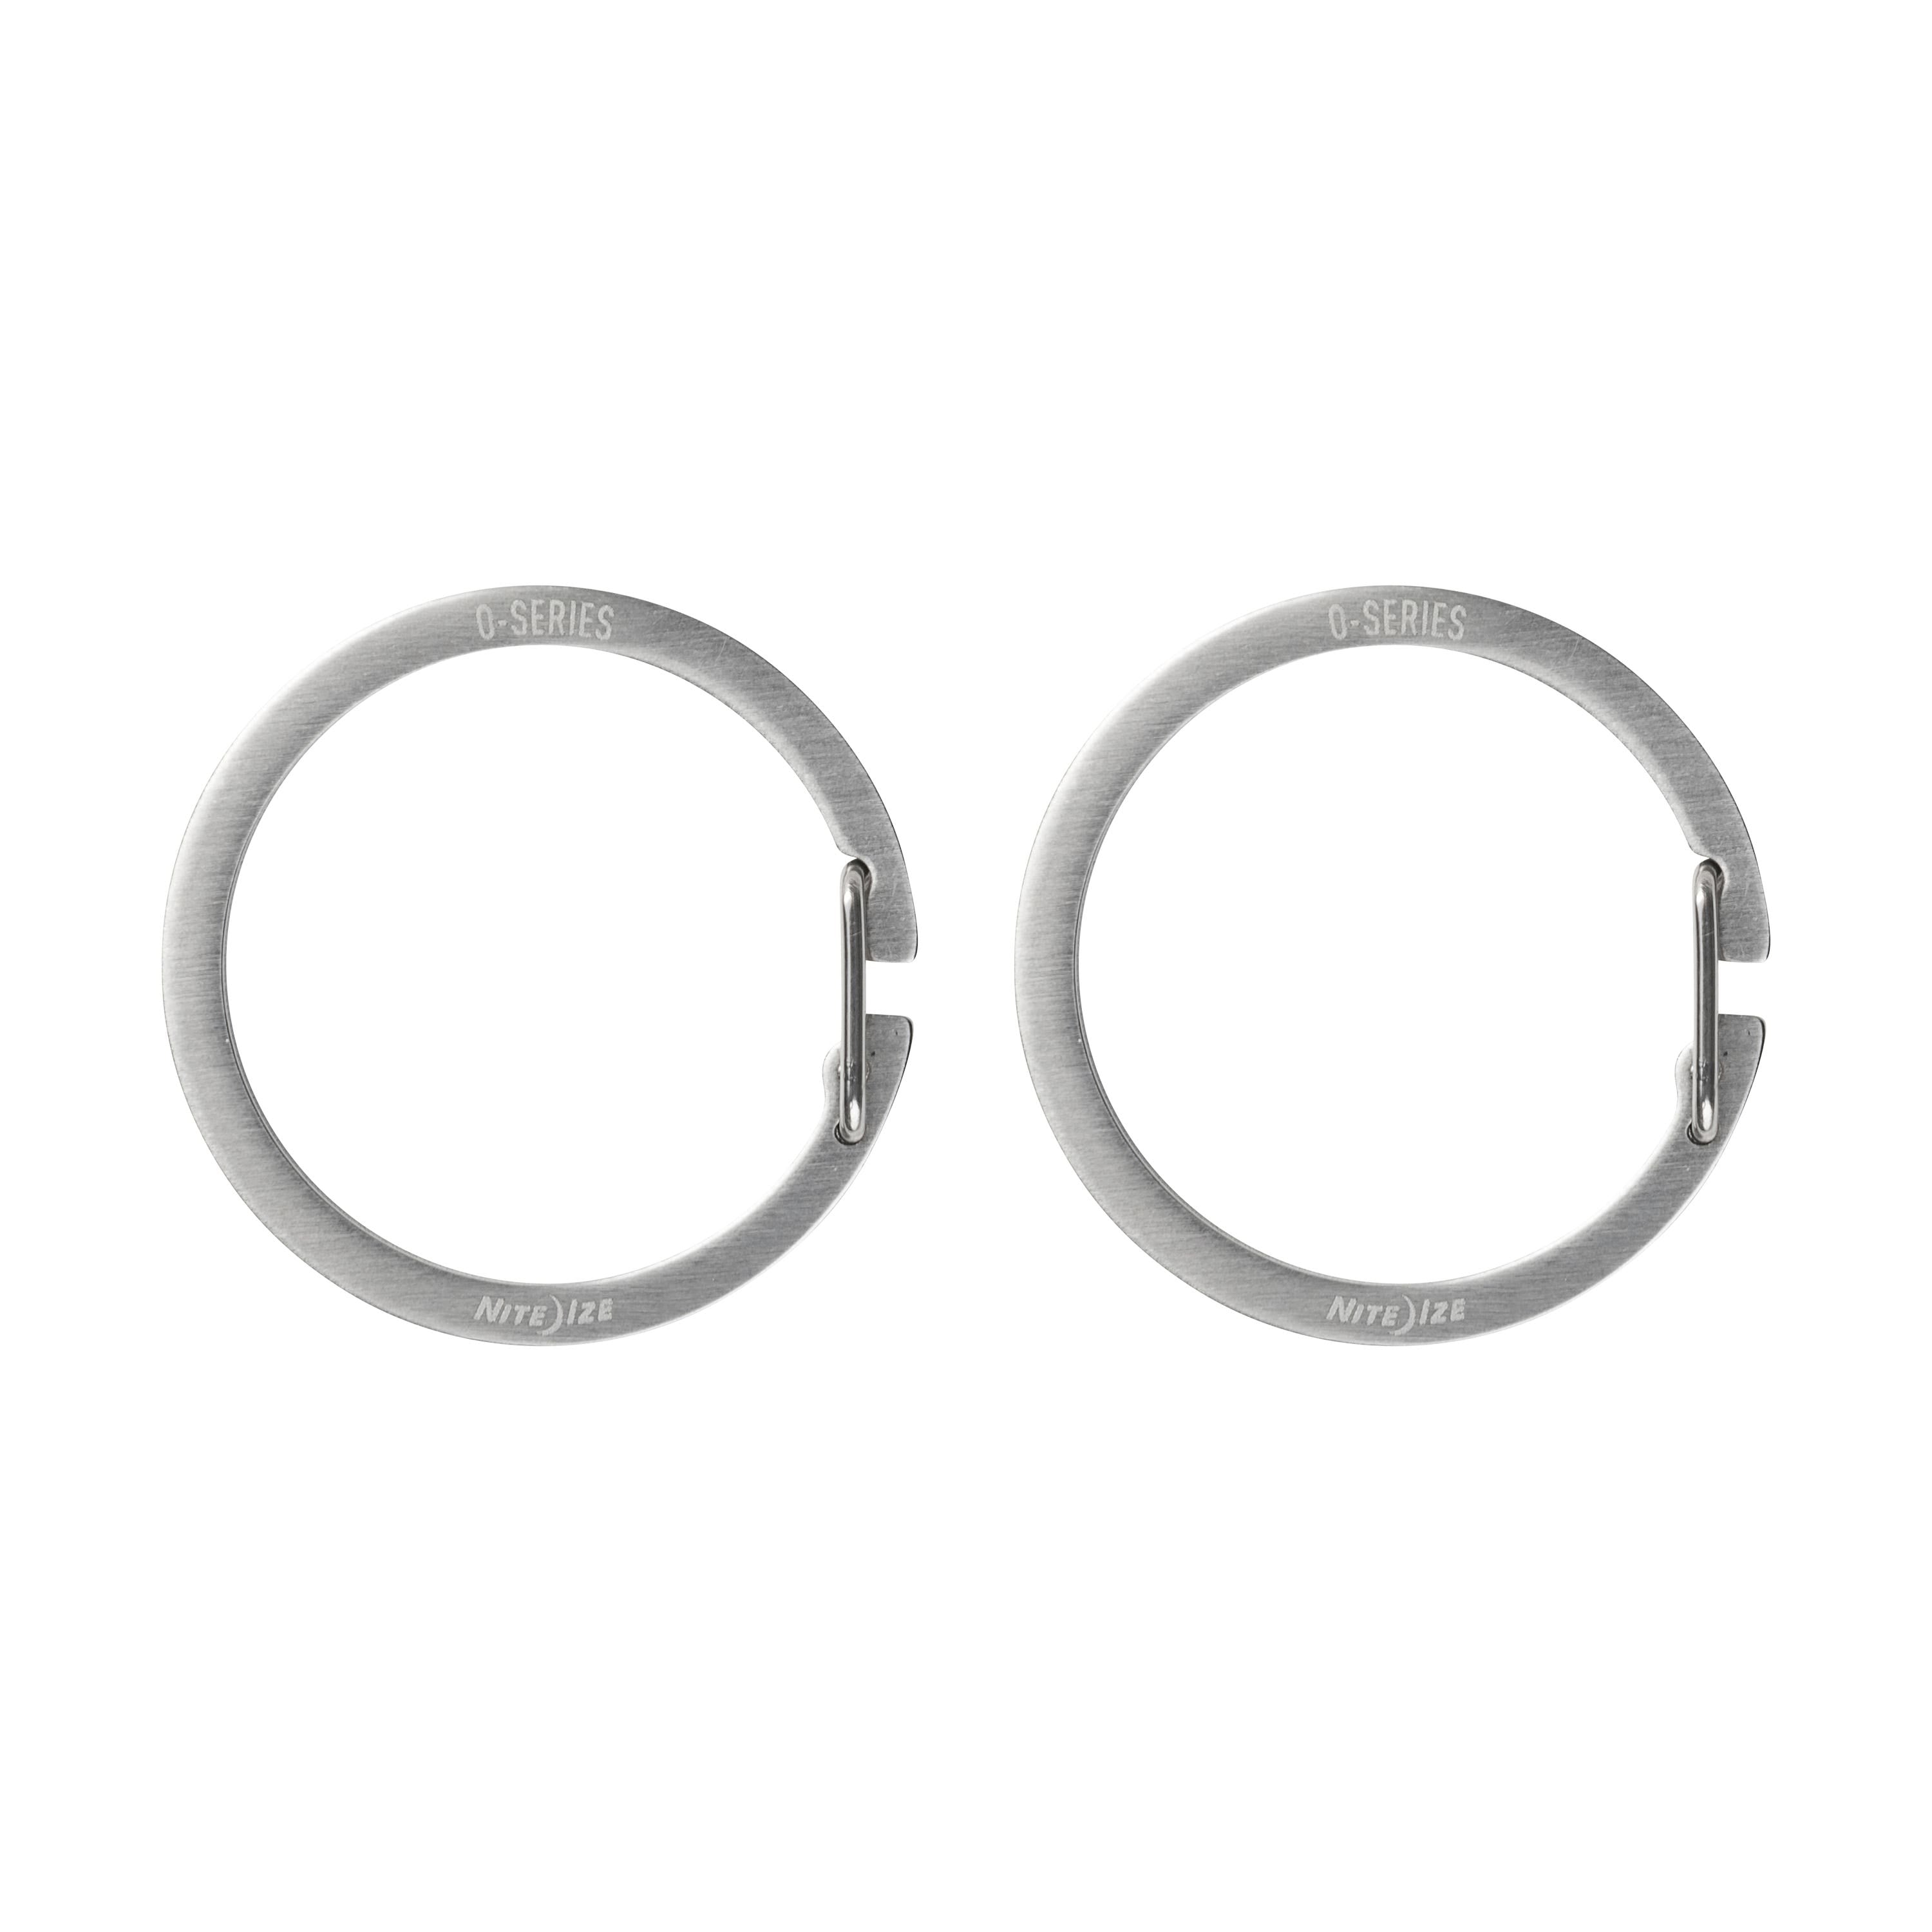 Nite Ize O-SERIES™ Gate Key Ring - 2pcs Pack